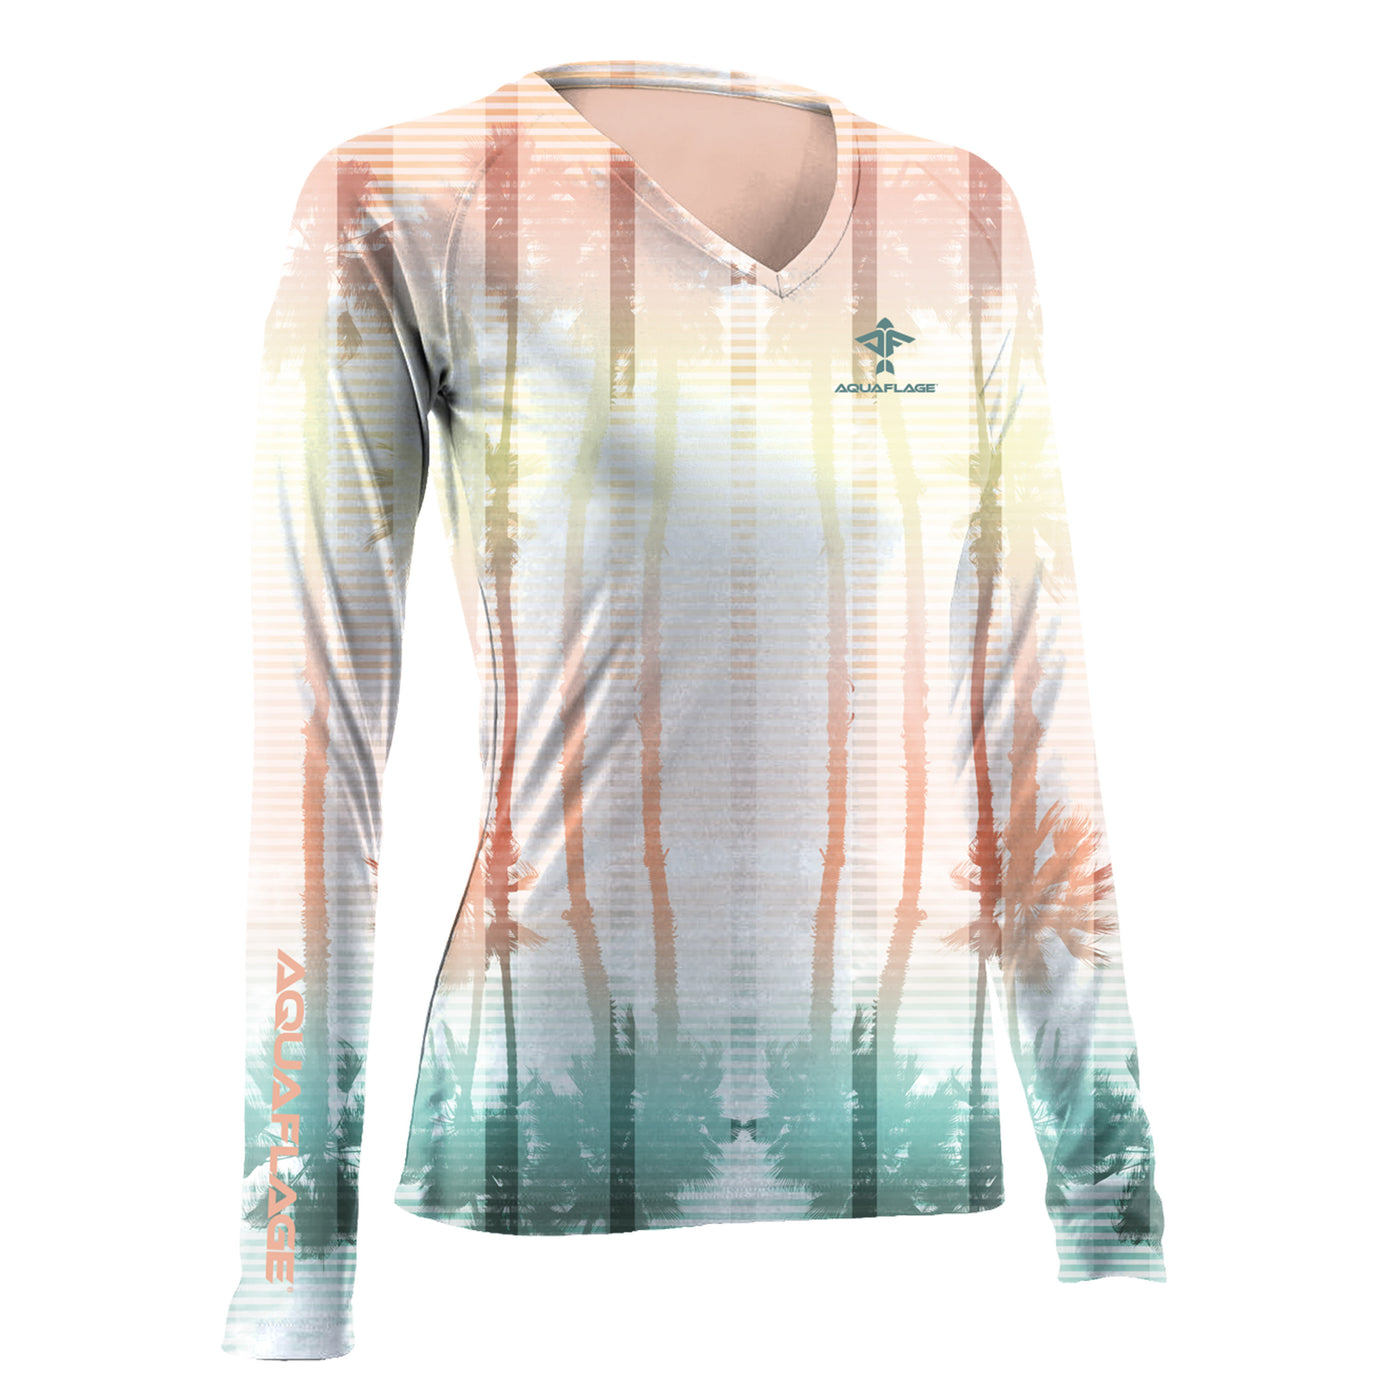 Aquaflage Faded Palms UPF 50 Sun Protection Long Sleeve Performance Shirt - Women's